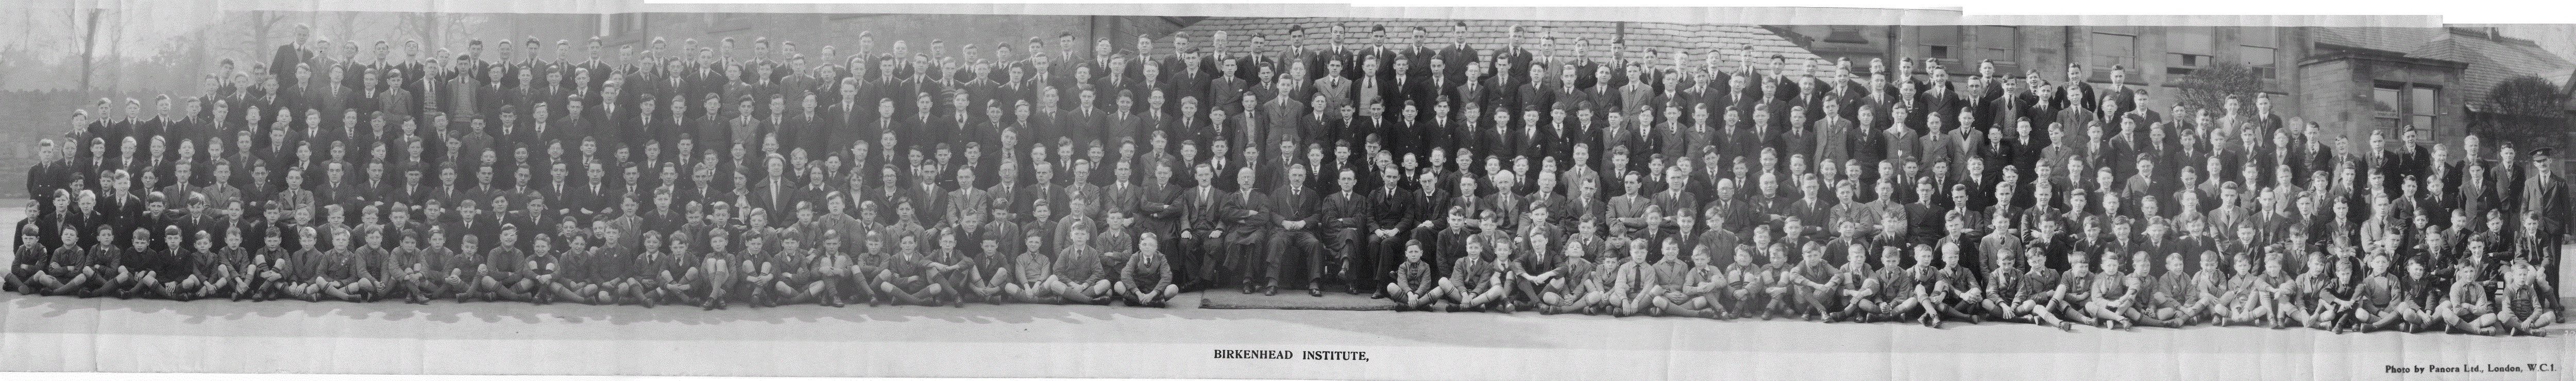 Whole School Photograph 1934